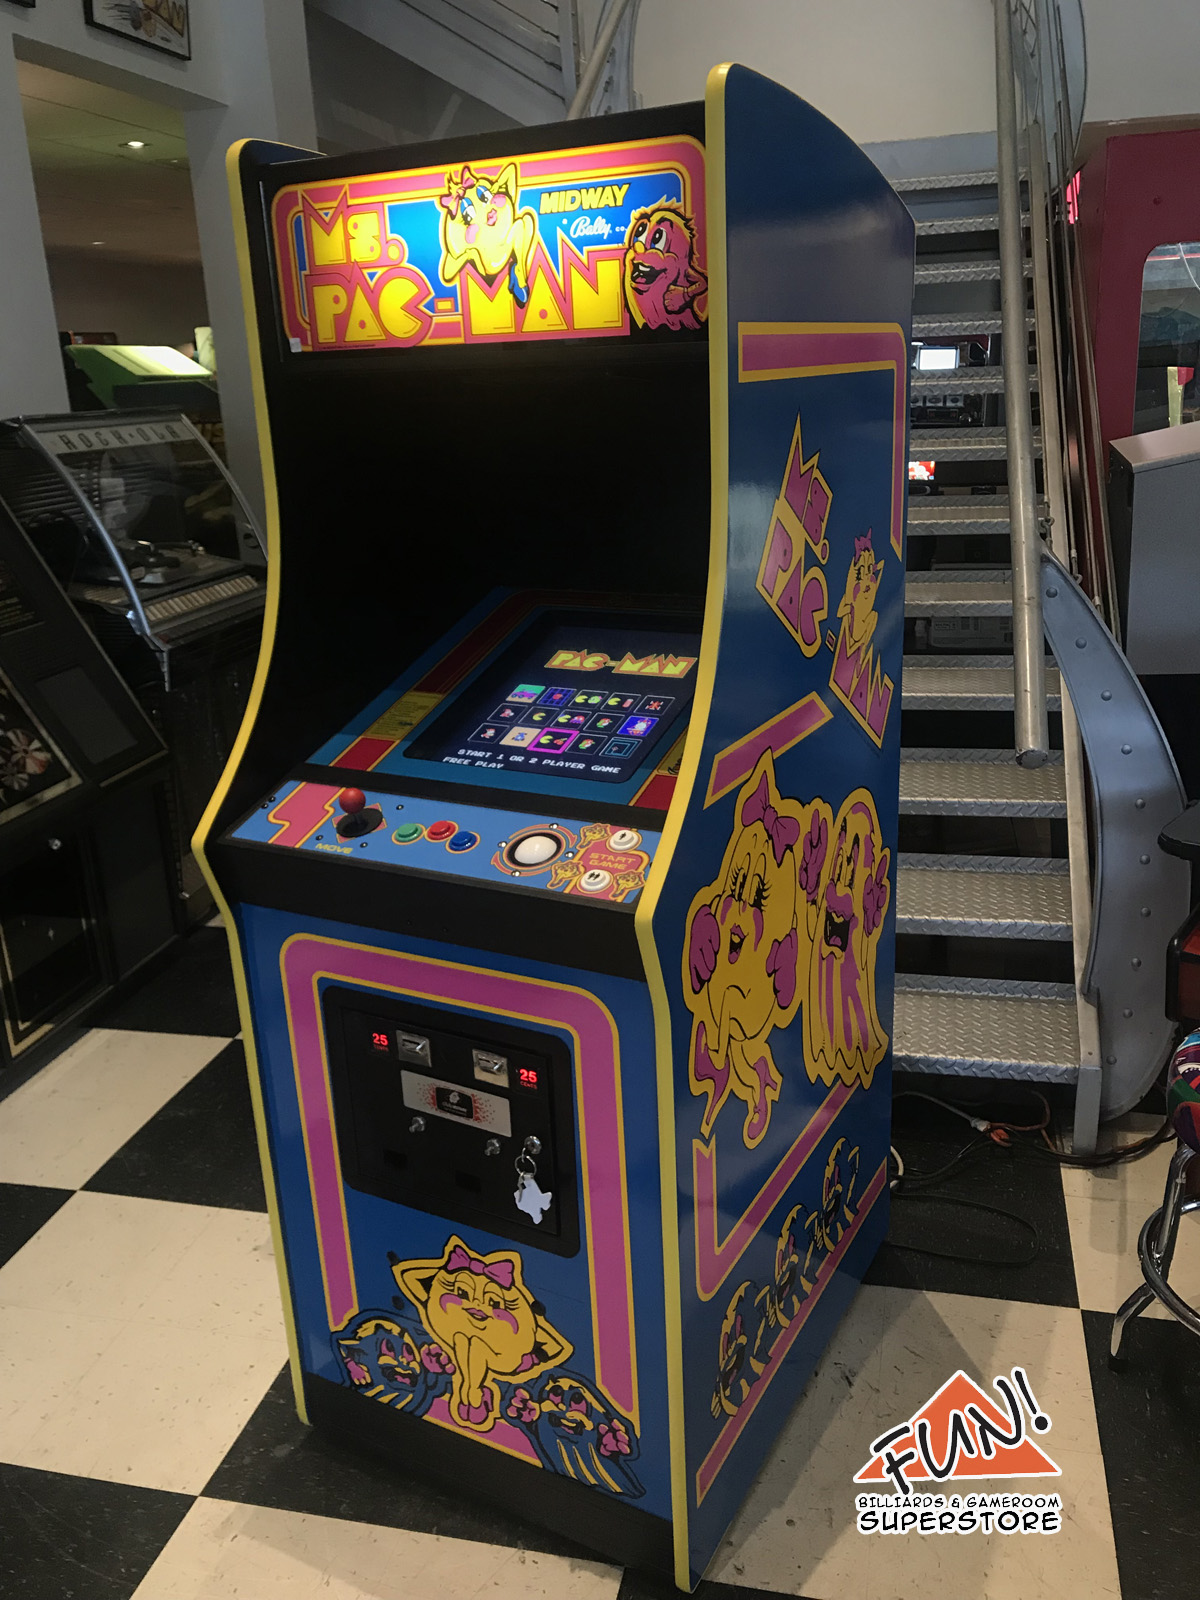 Cosmic MultiGame Upright Arcade Machine